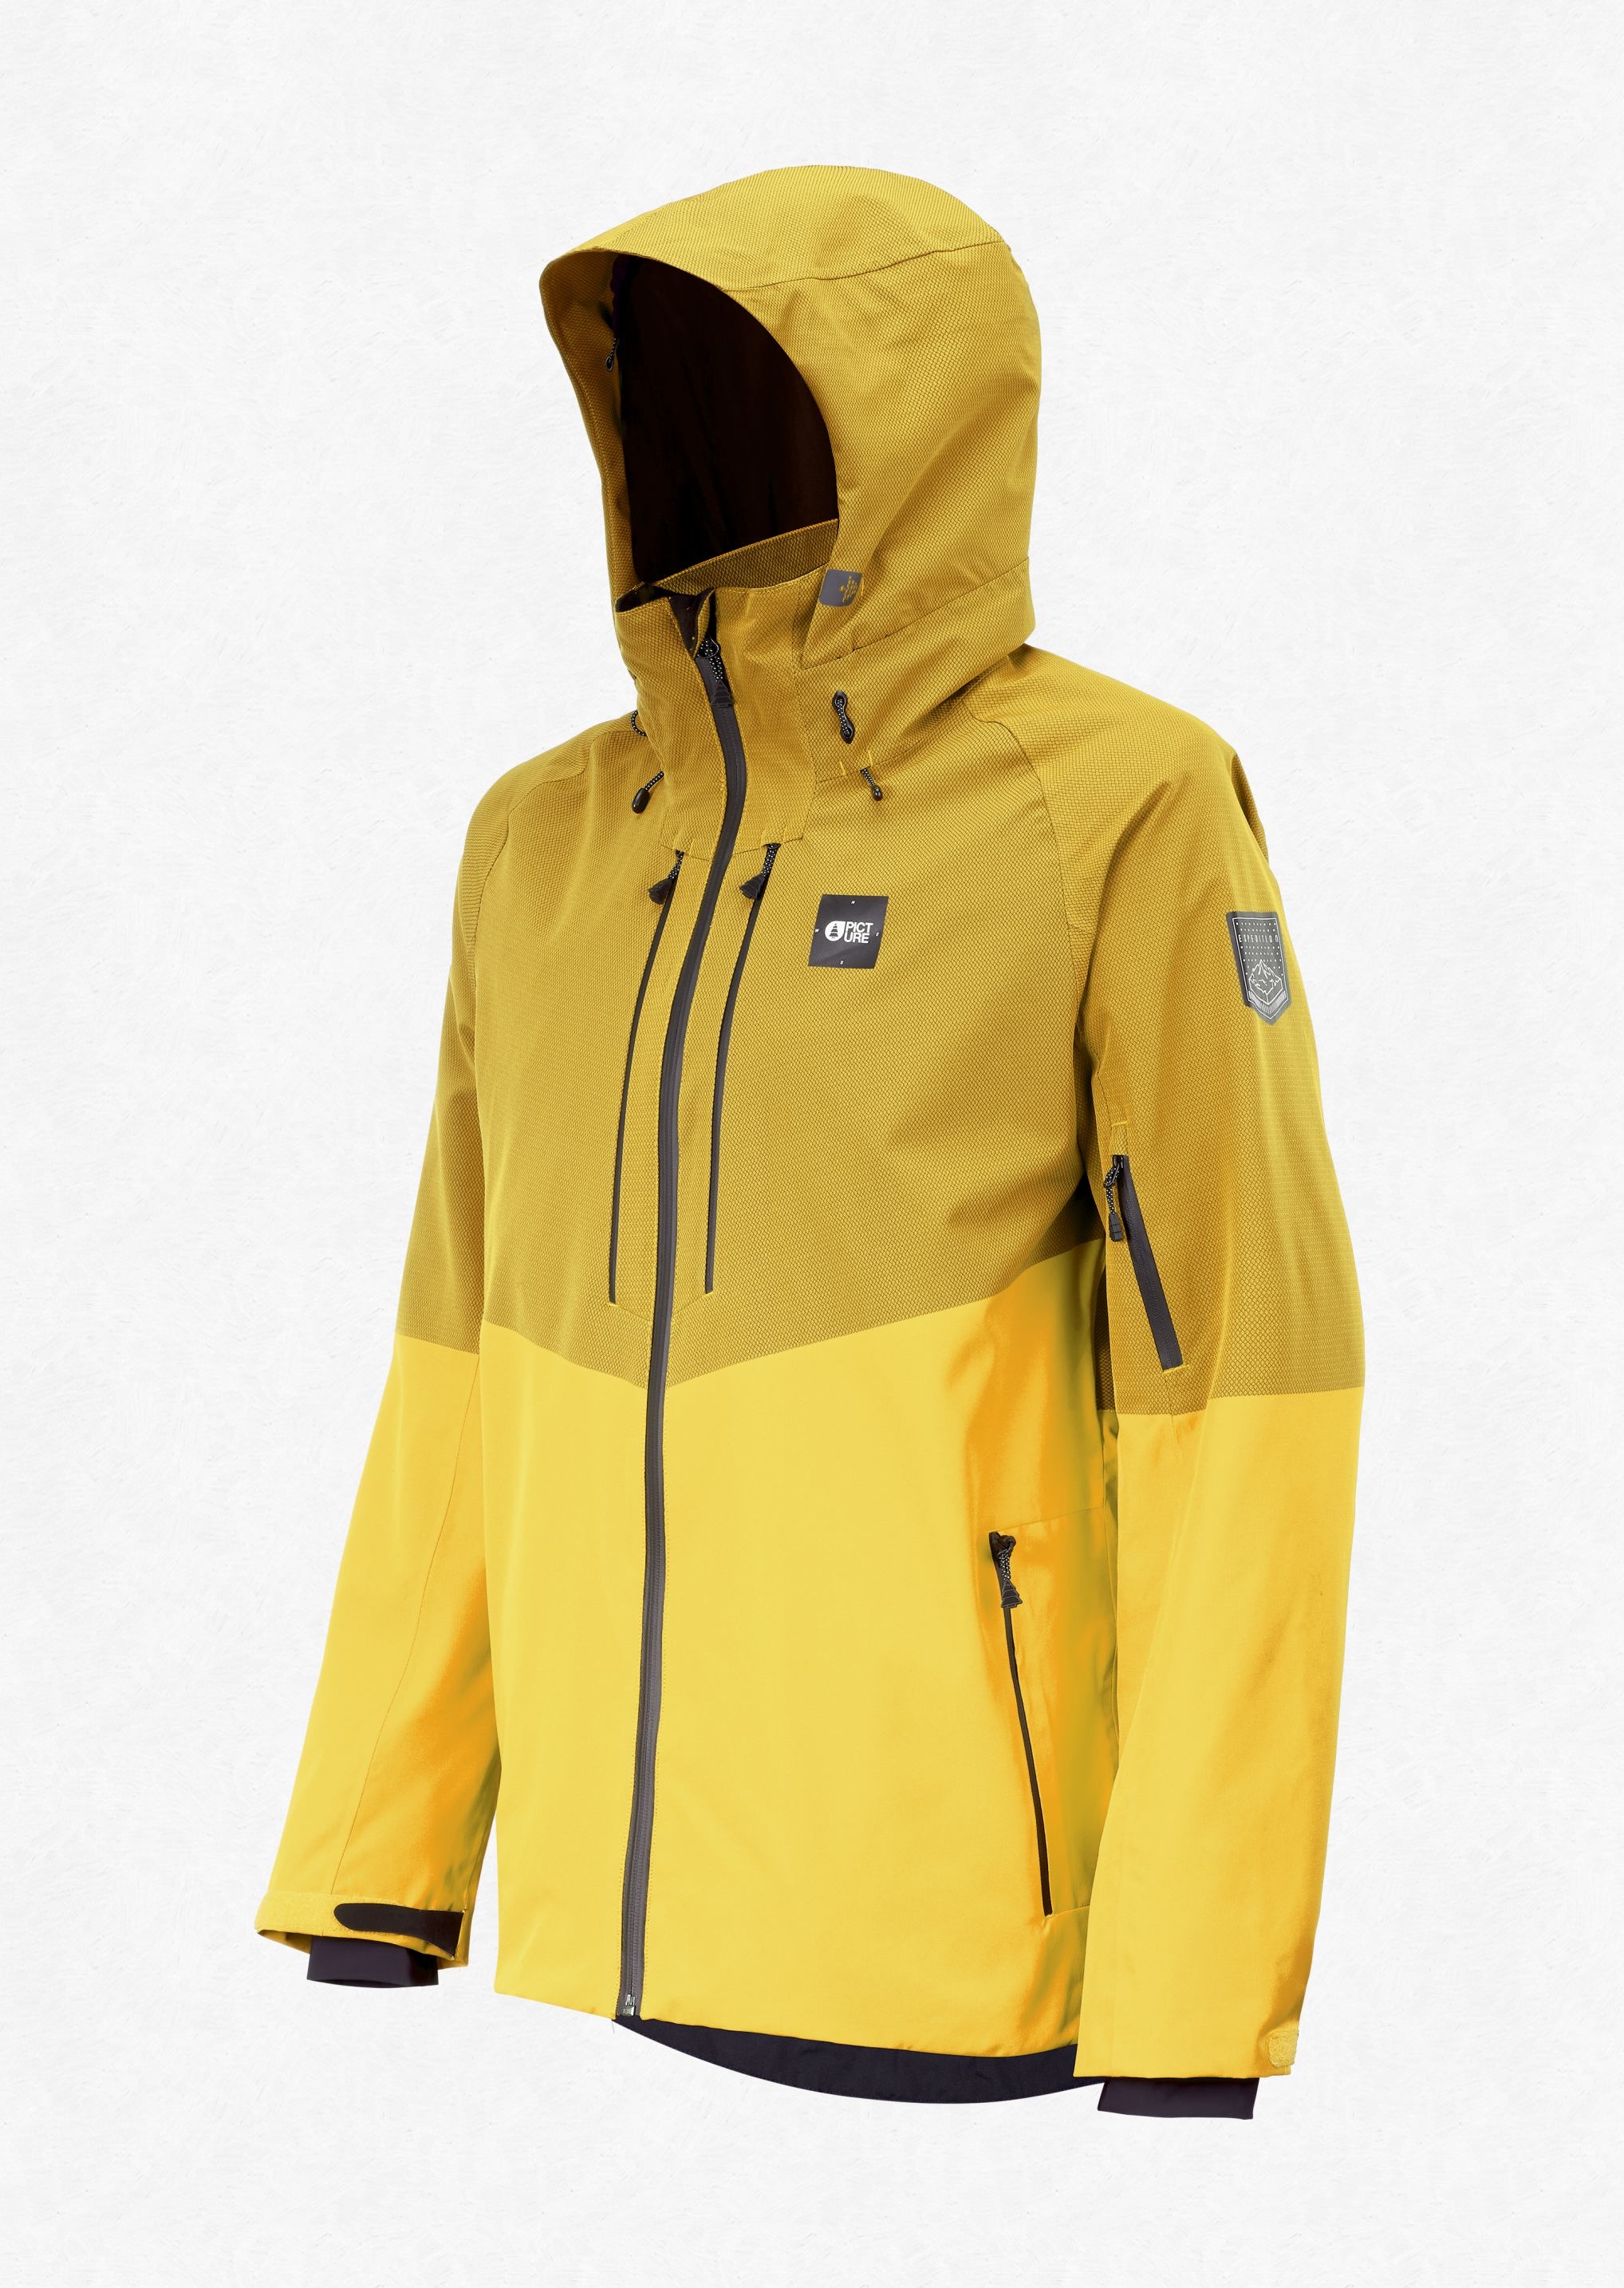 2021 Goods Mens Ski/Snowboard Jacket, Safrane(Yellow) — Dick's Board Store